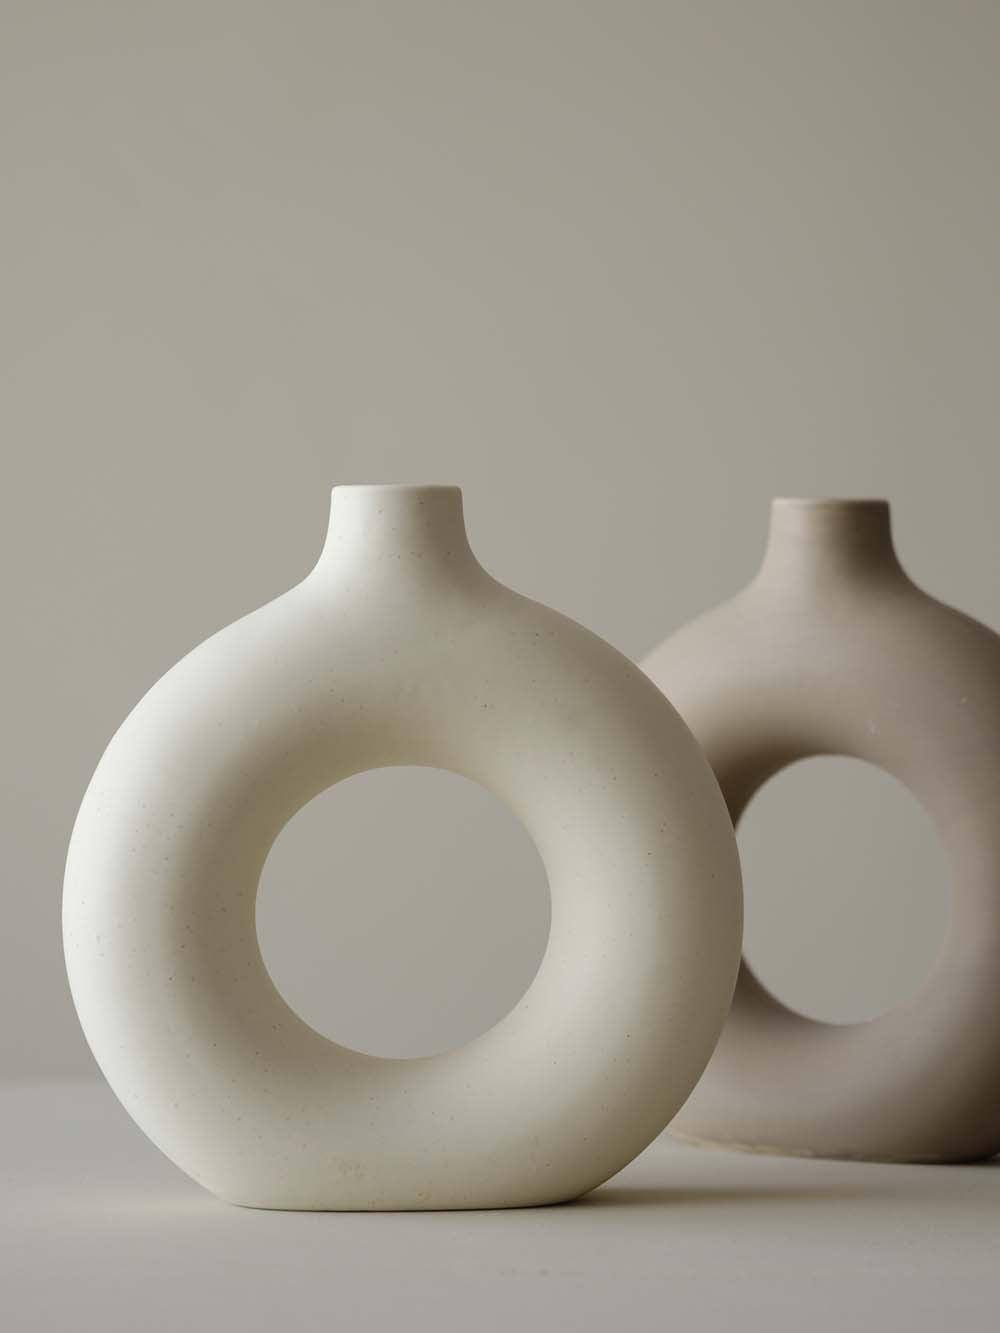 Hollow Ceramic Vase - WENSHUO